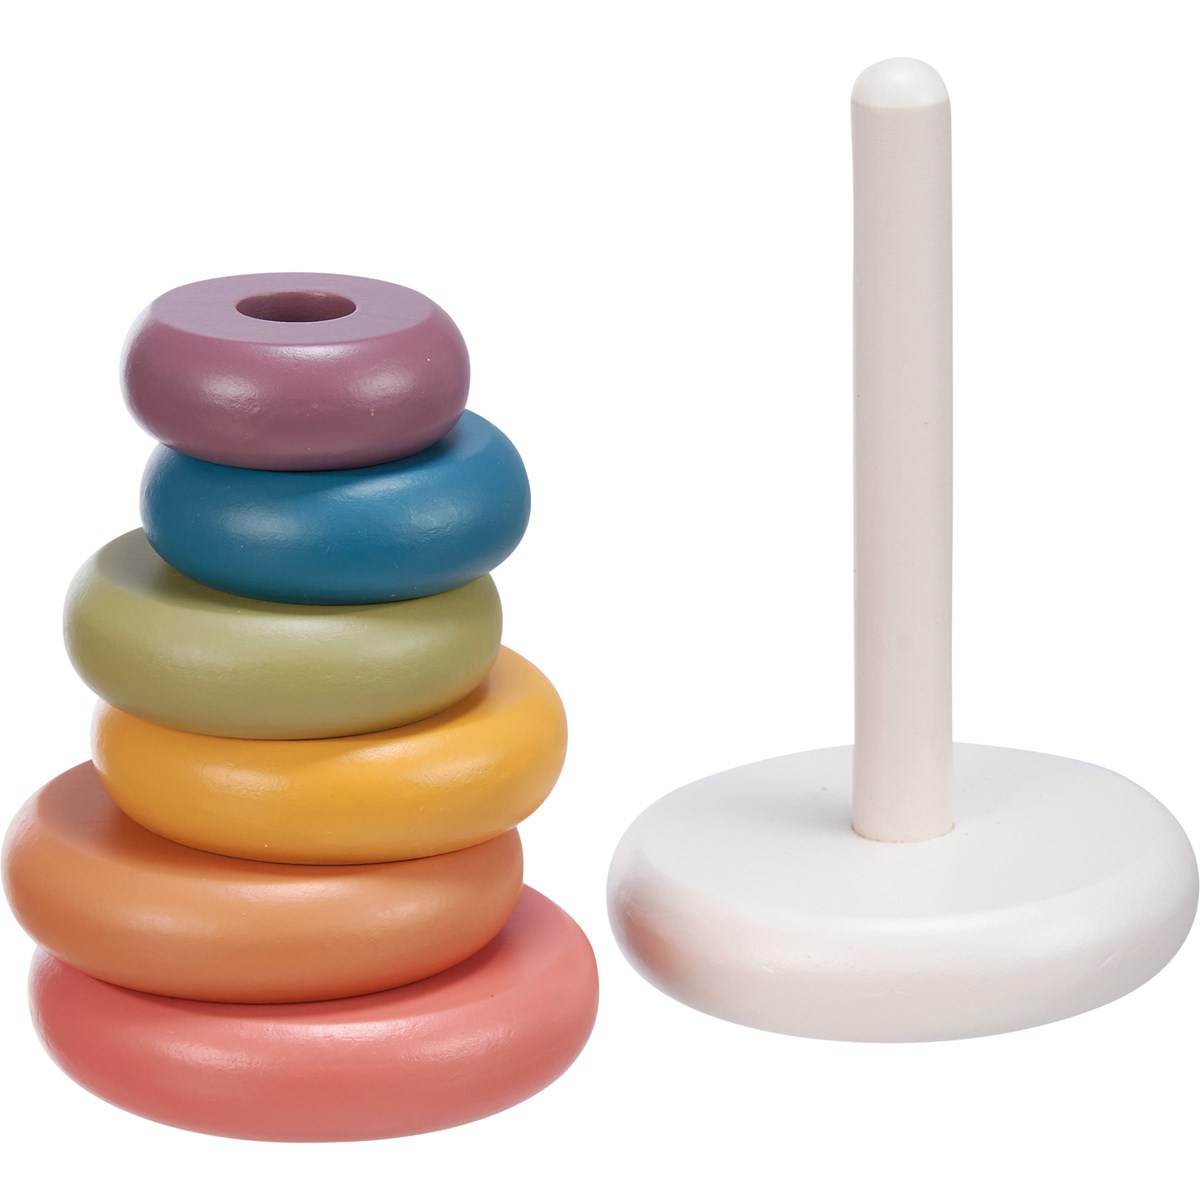 Stacking Toy - Rainbow Rings  - 3.50" Diameter x 5.50" - Wood, Metal